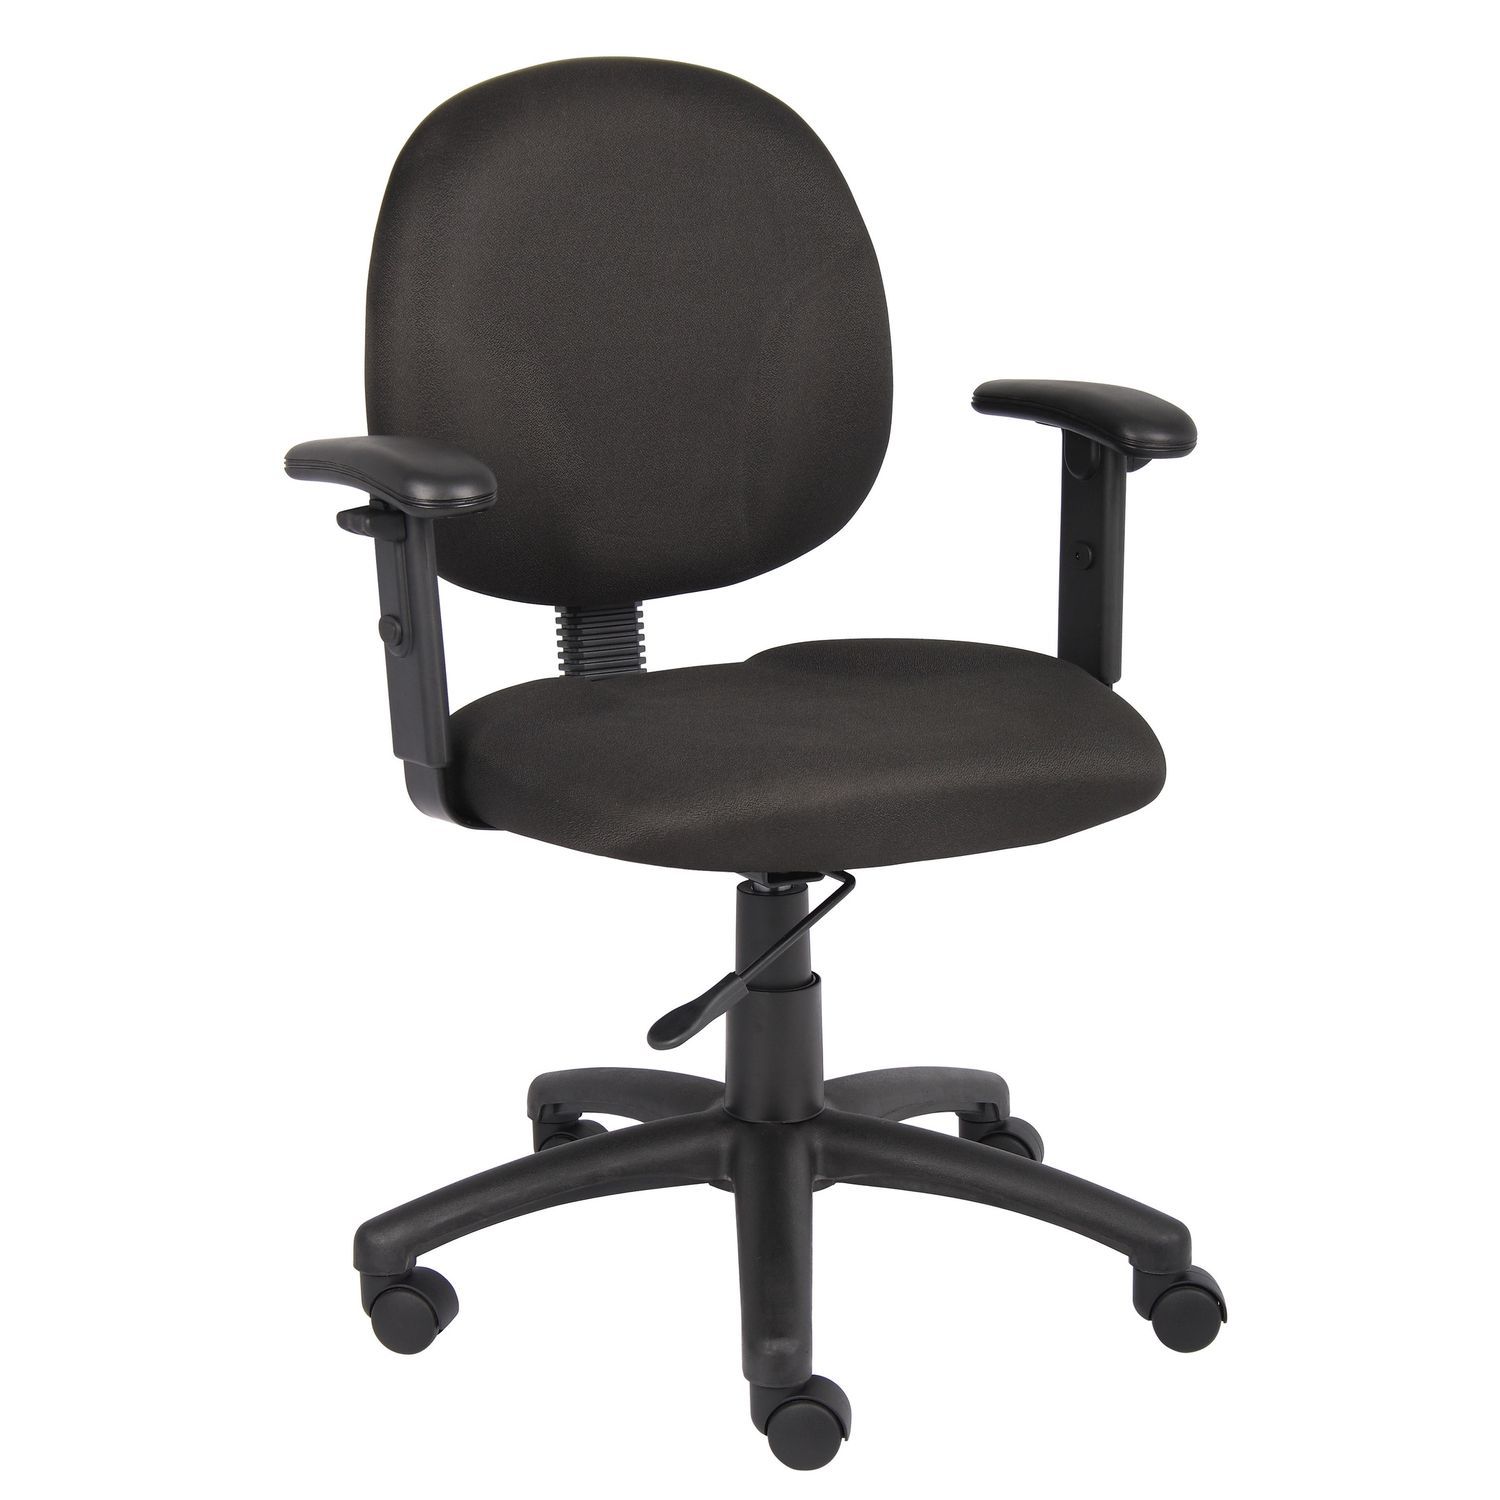 Boss Task Chair - Black Seat - 19. 50" Seat Width x 18" Seat Depth25" Width x 25" Depth x 40" Height